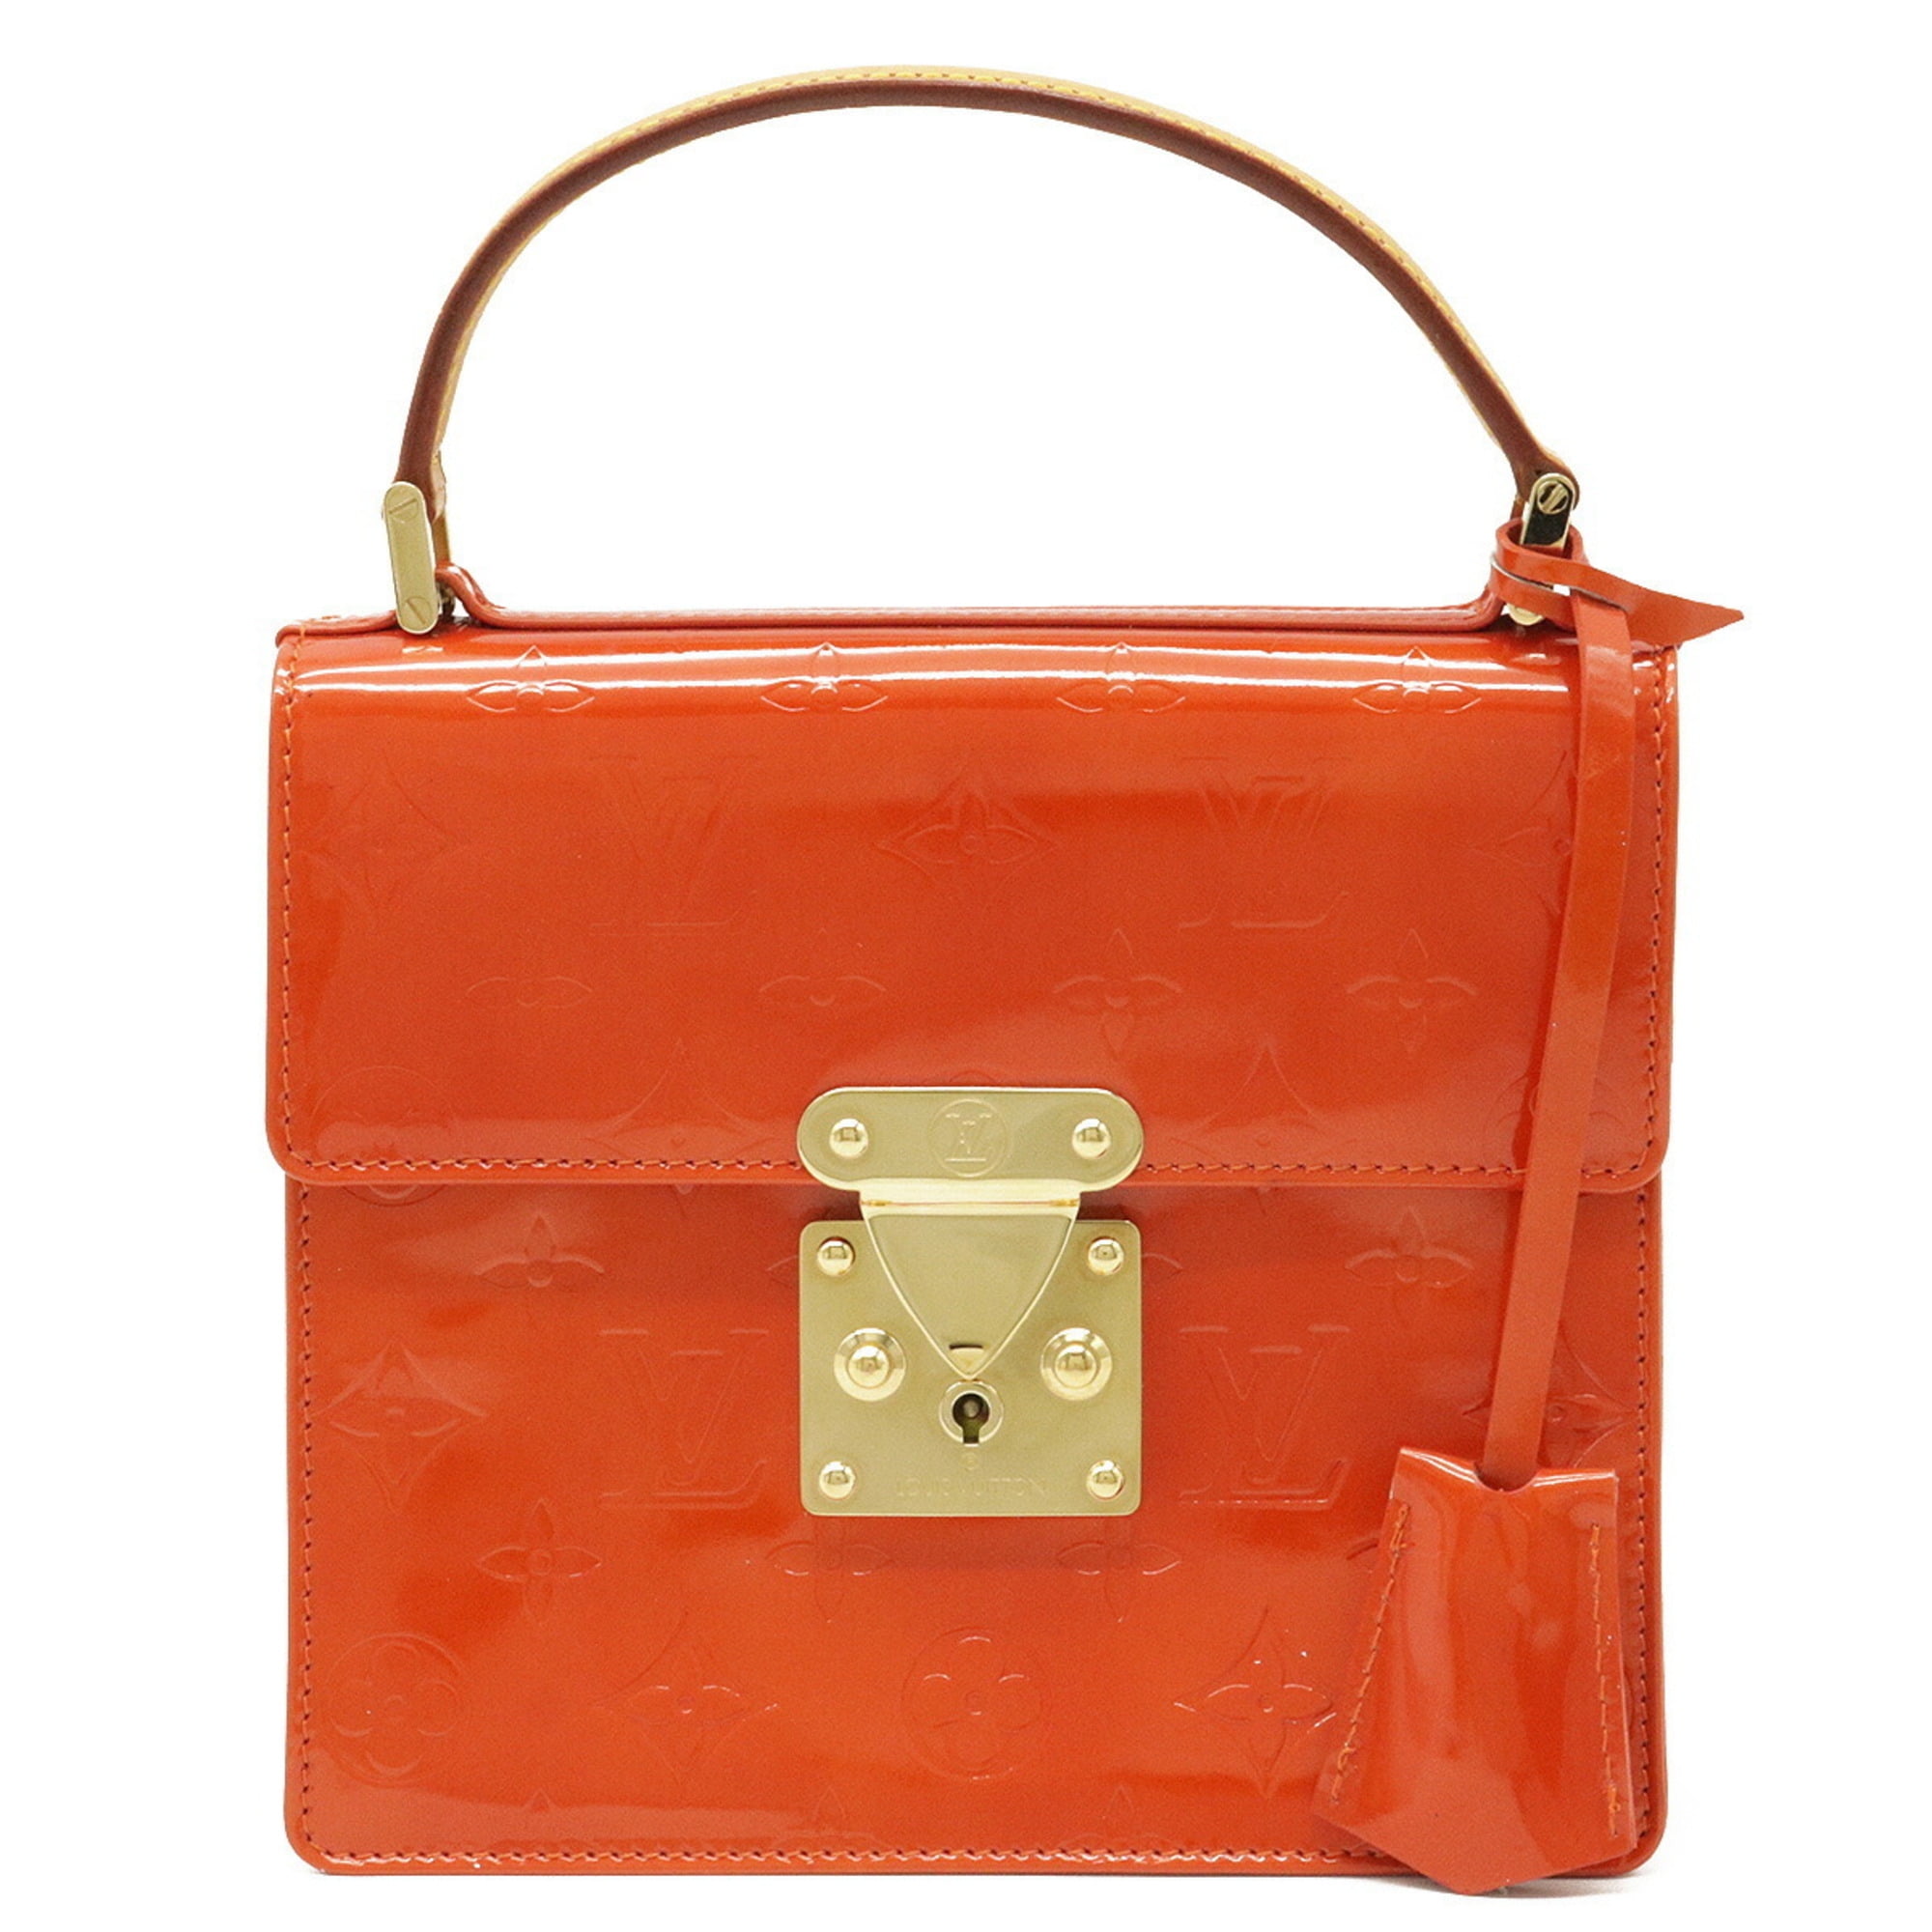 Authenticated used Louis Vuitton Louis Vuitton Monogram Vernis Spring Street Handbag Enamel Leather Orange Limited Color M91025, Adult Unisex, Size: (